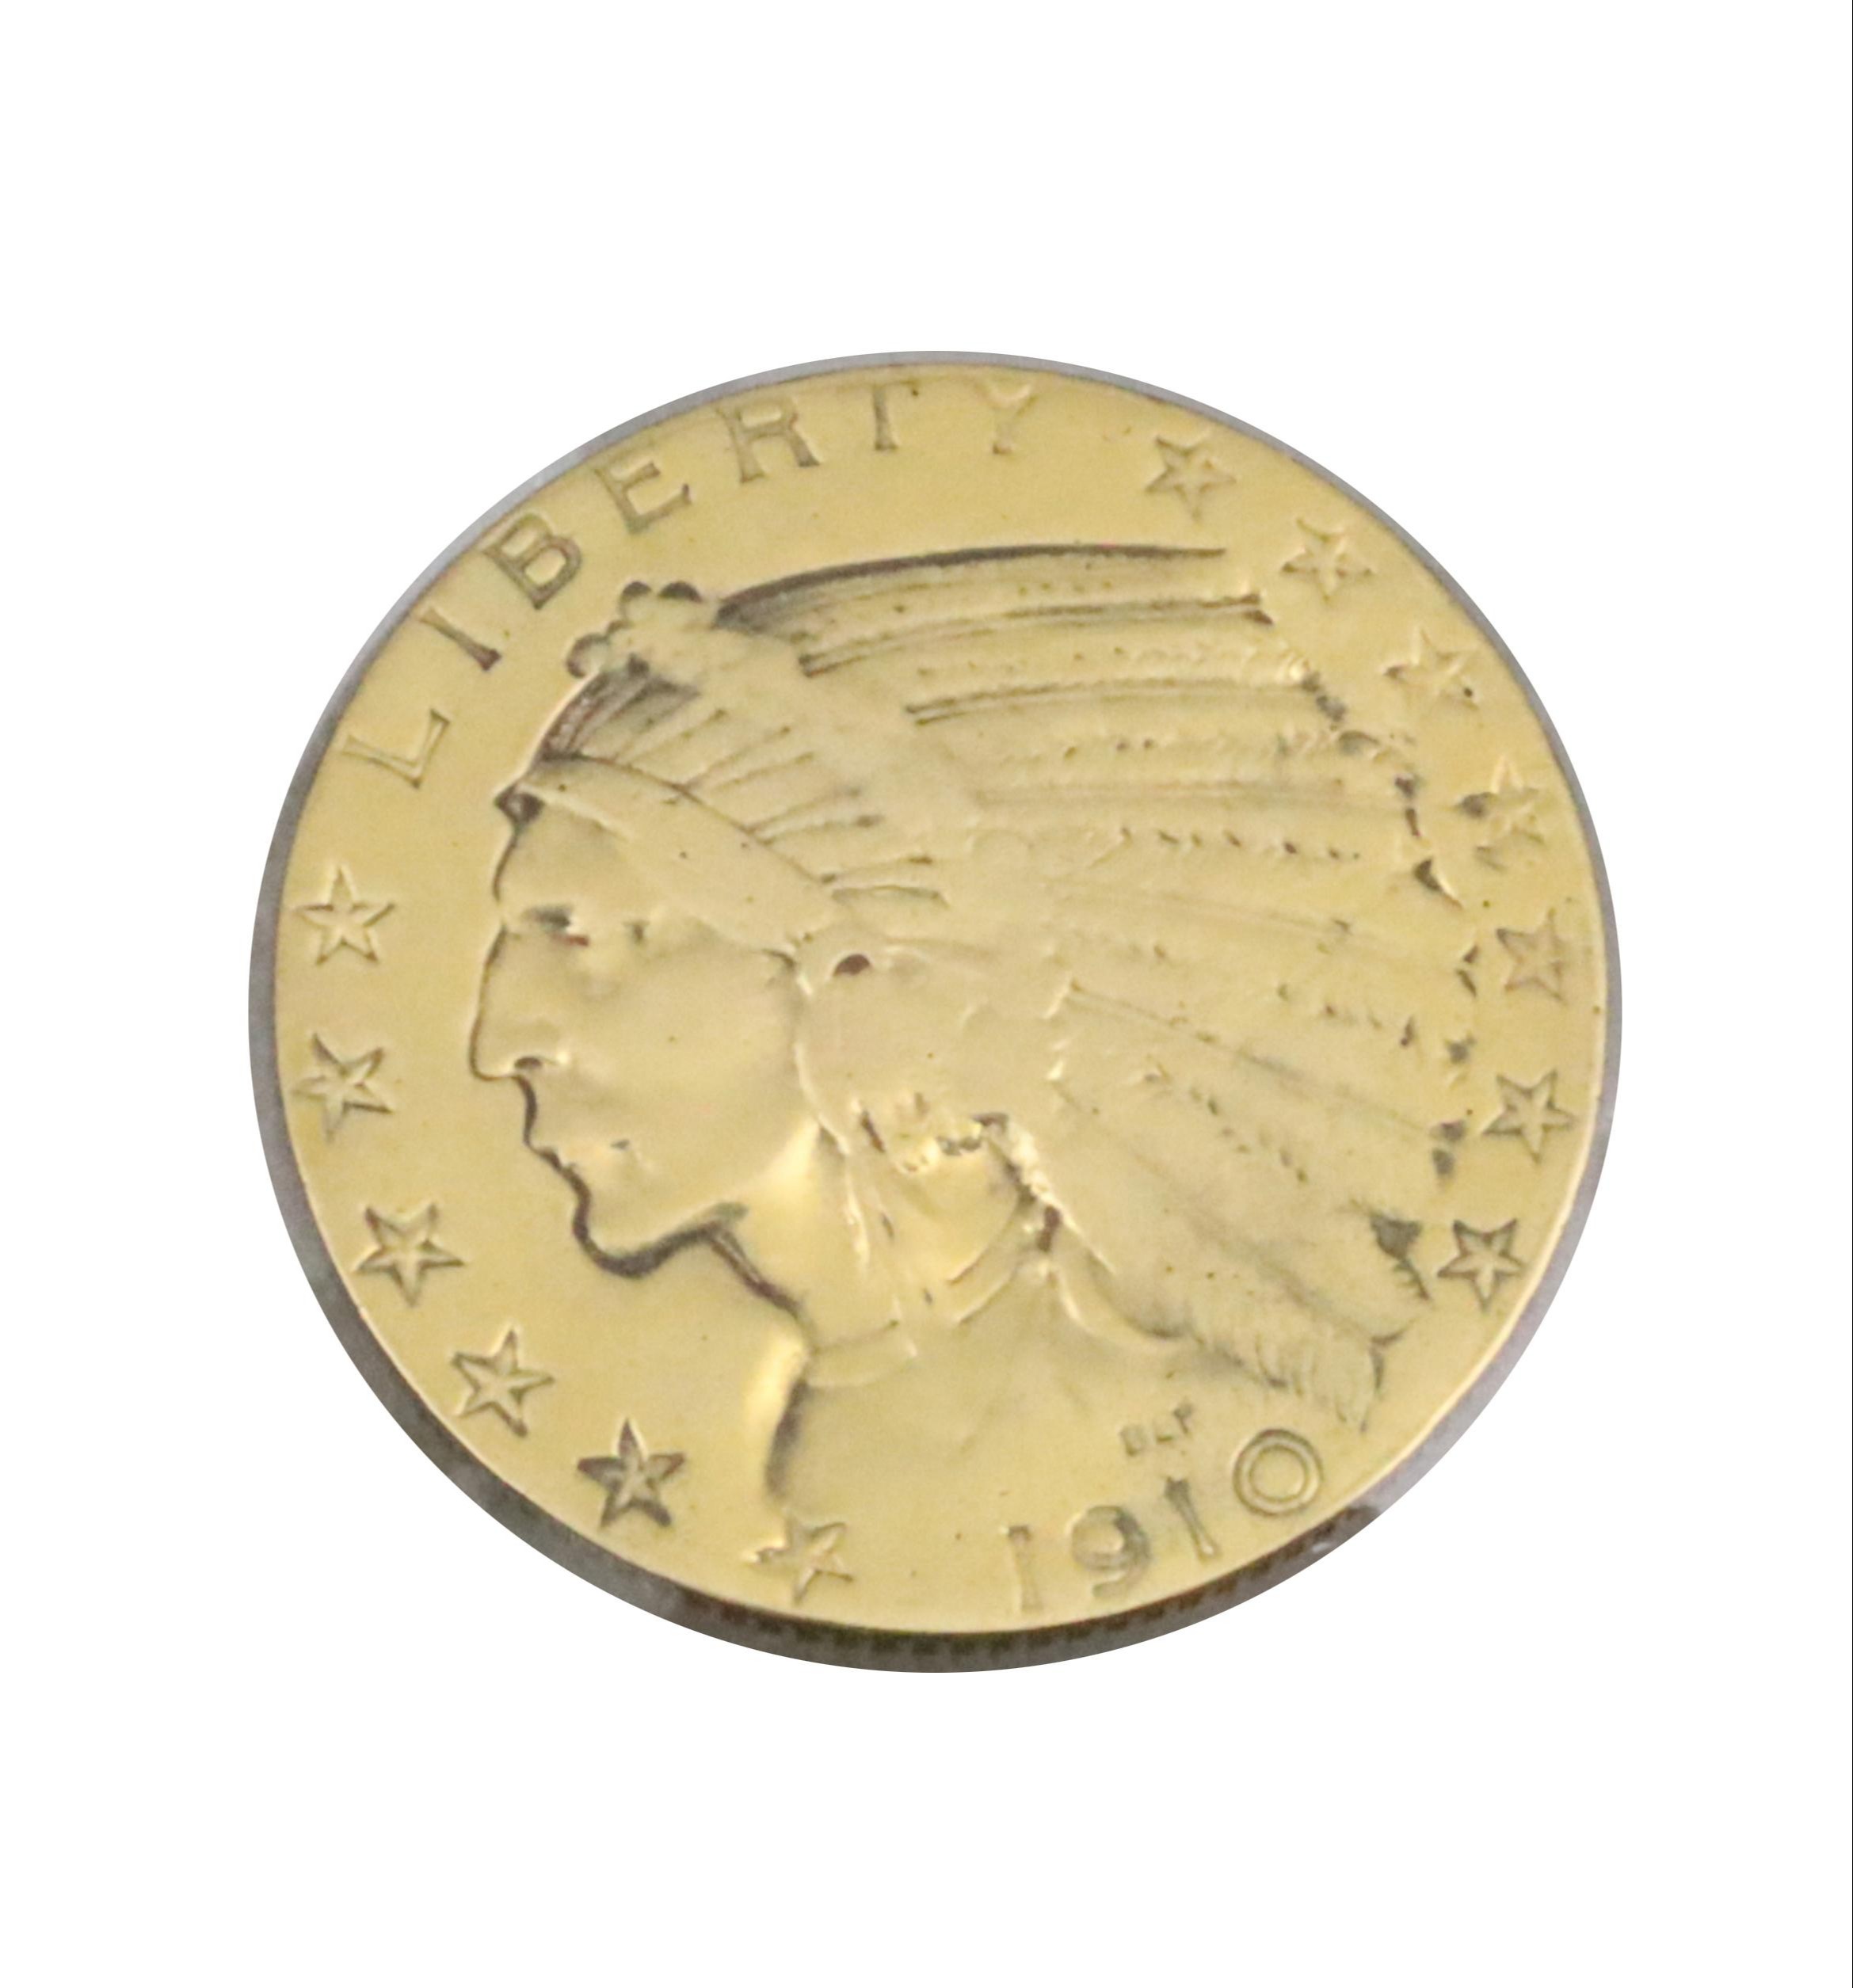 1910 F12 5 INDIAN HEAD GOLD COIN 3b3a15